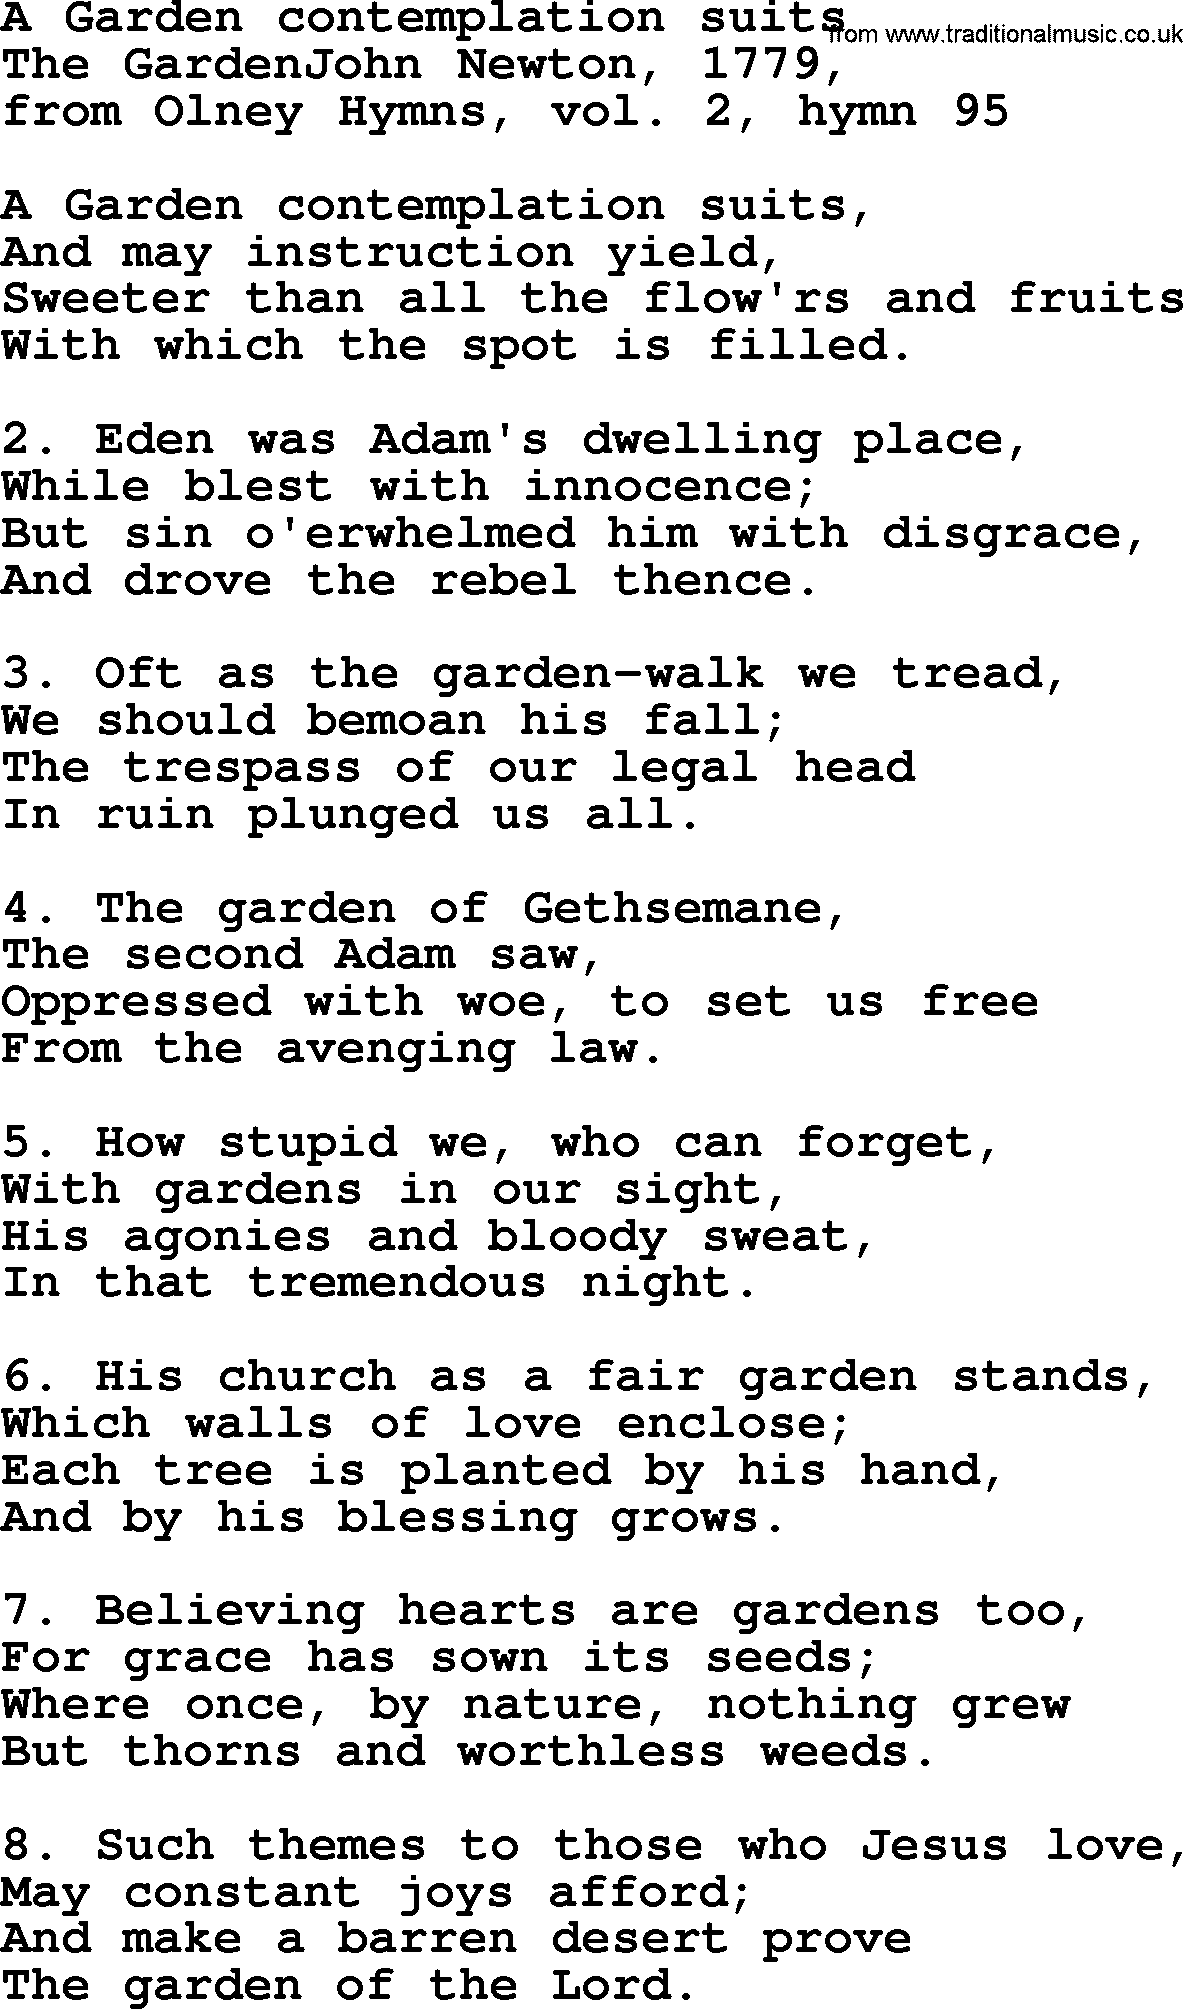 John Newton hymn: A Garden Contemplation Suits, lyrics